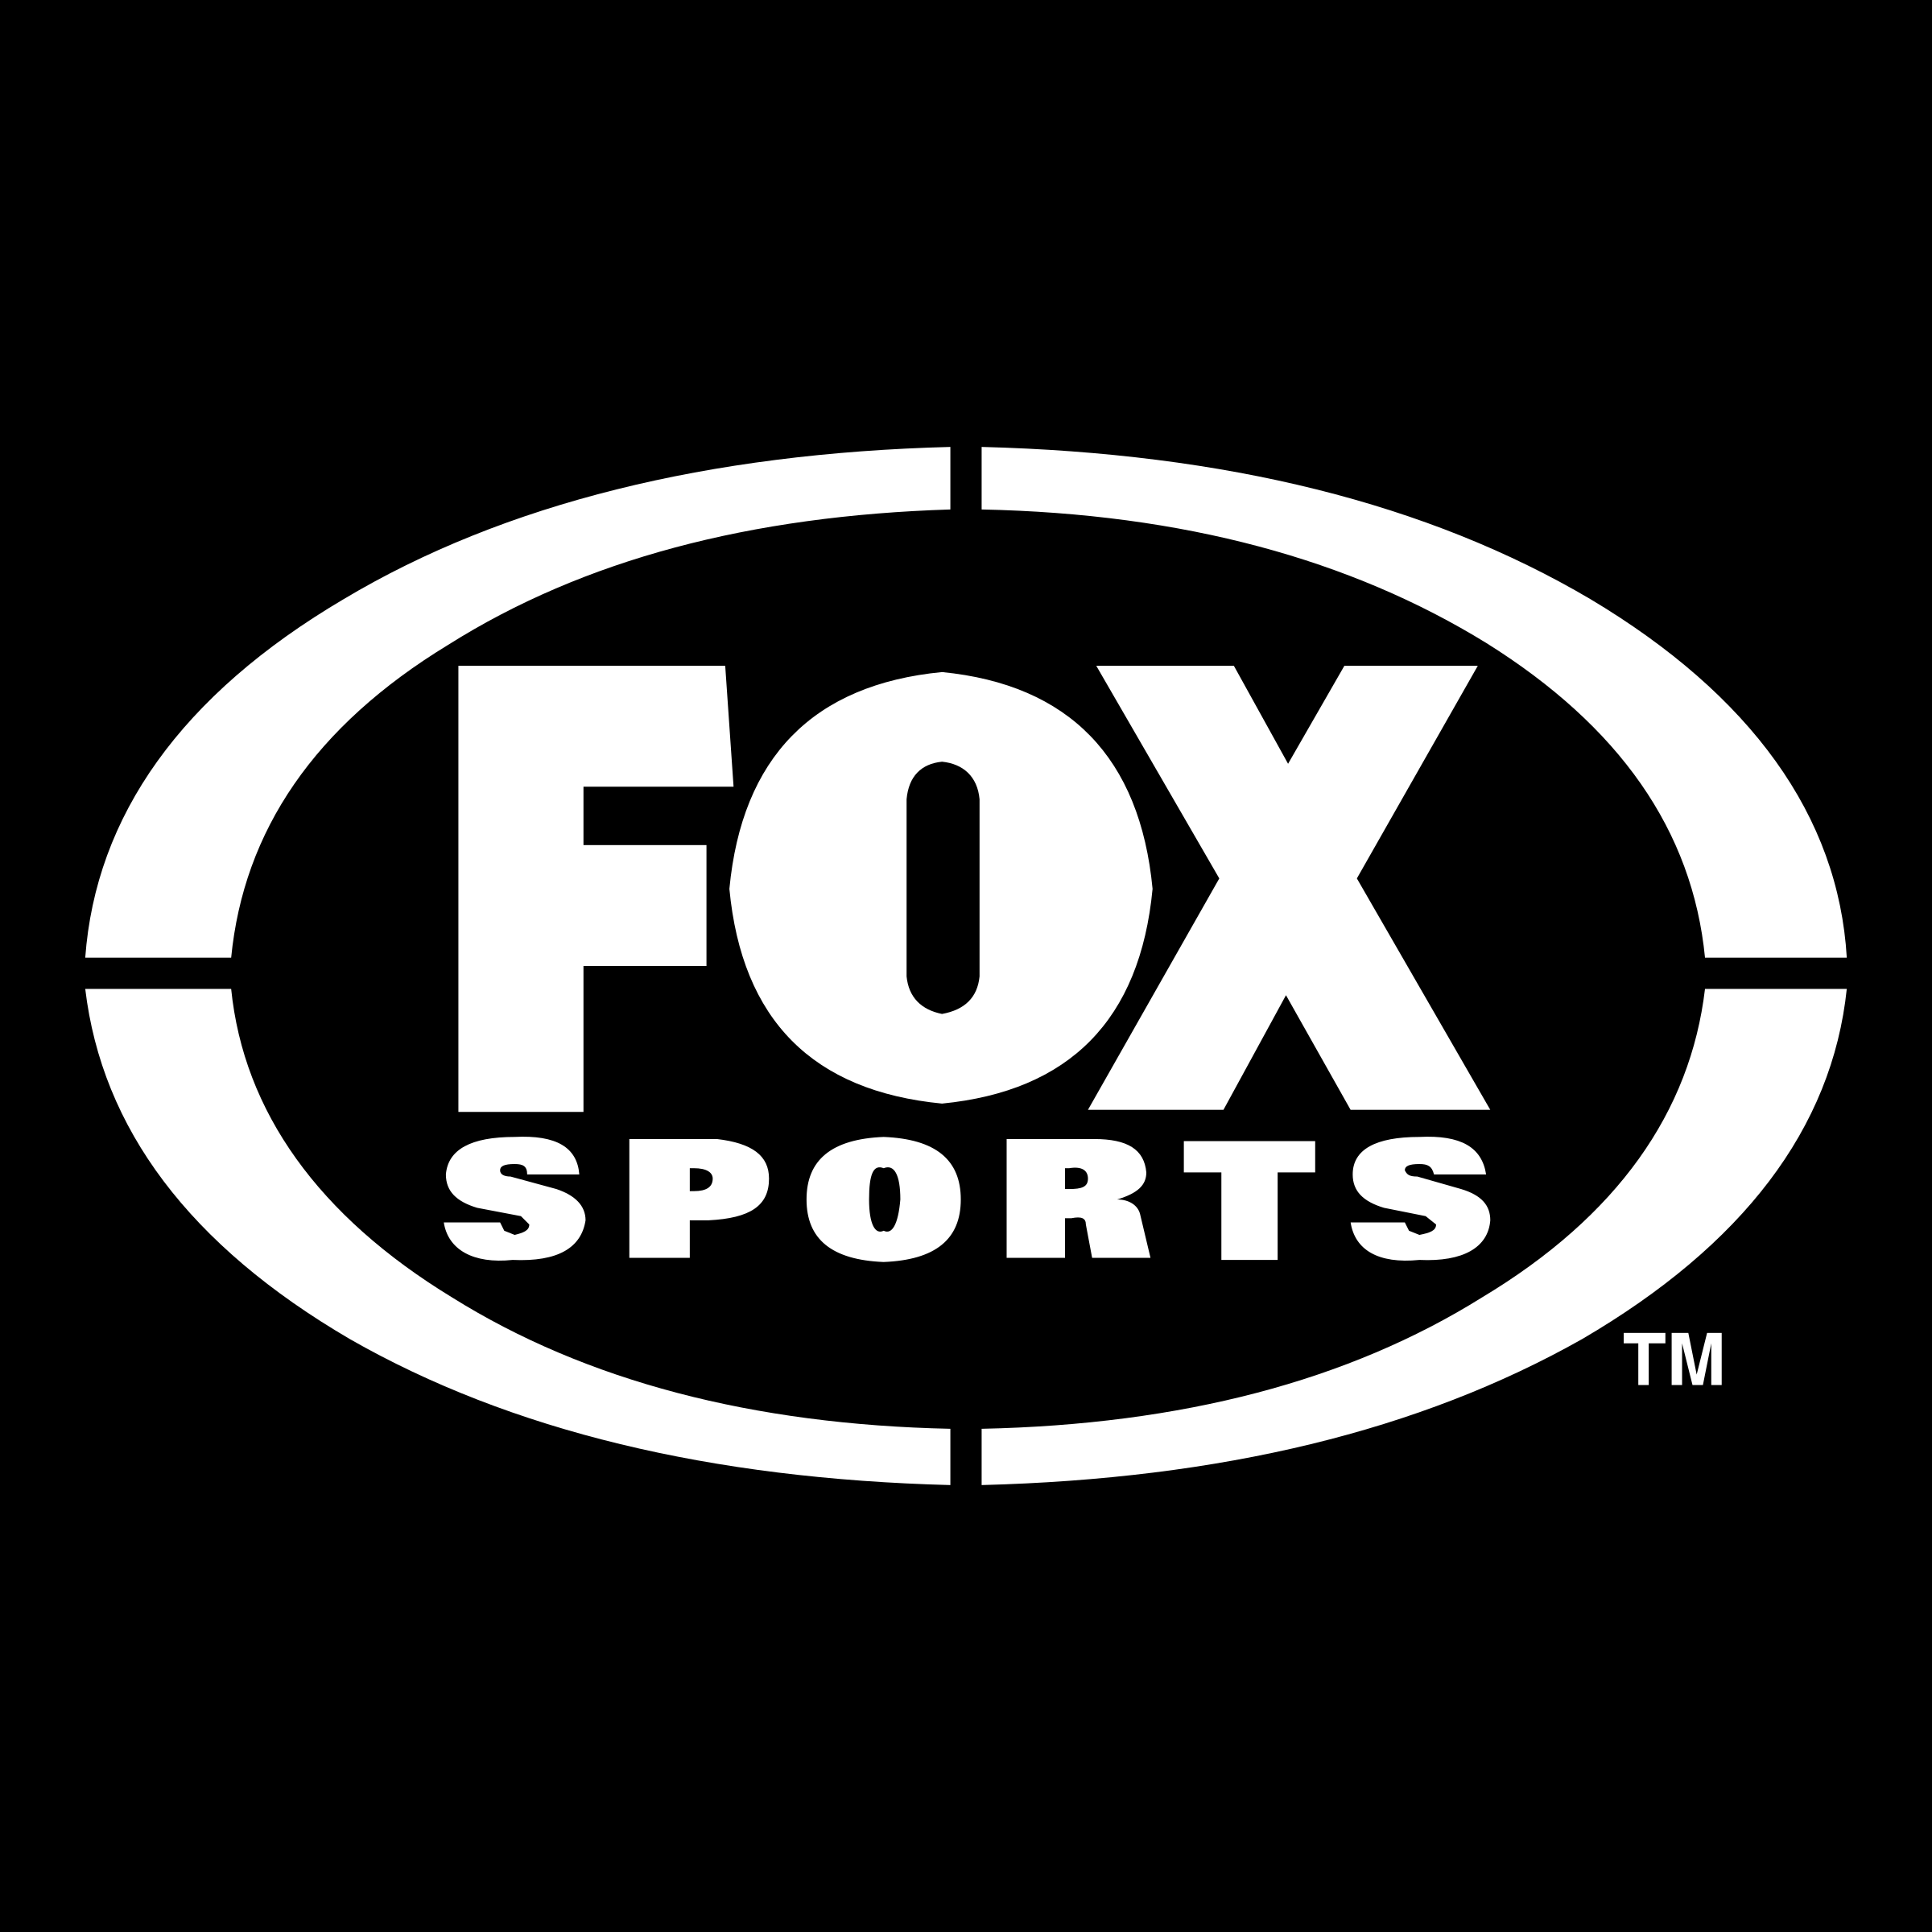 fox-sports-1-logo-png-transparent.png